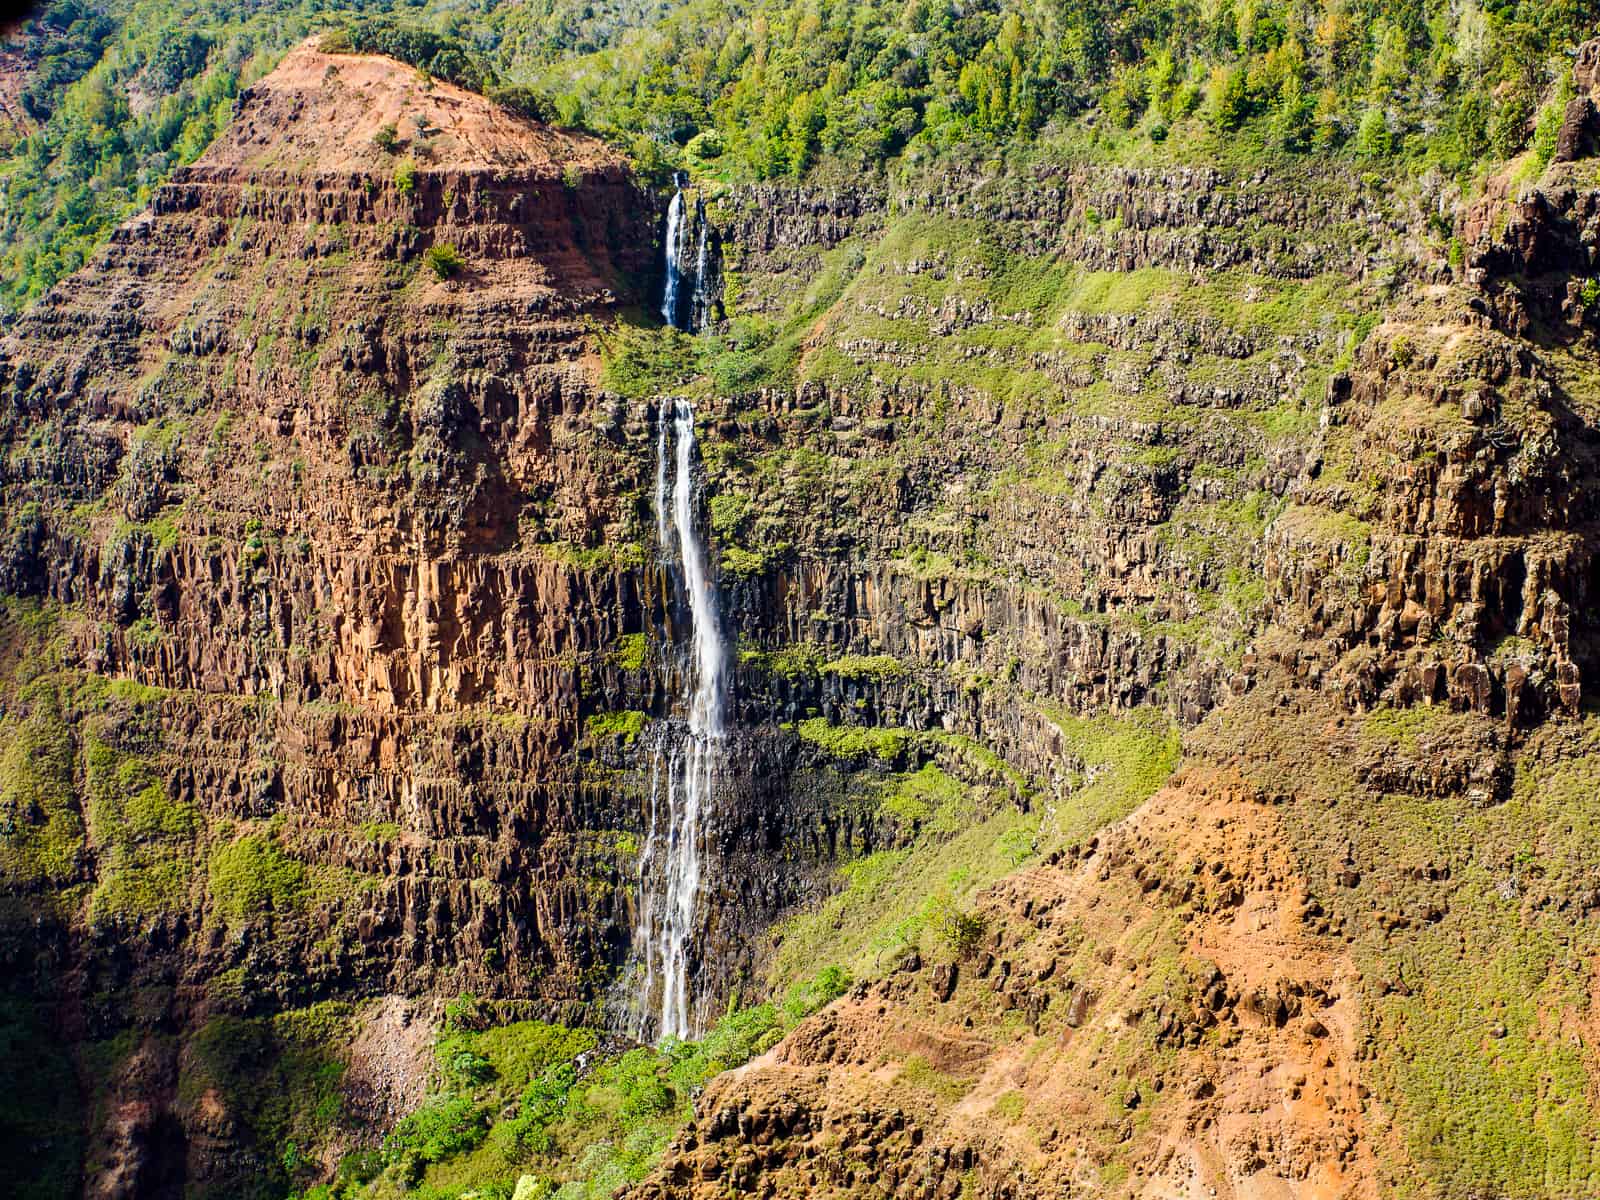 Waipoo falls